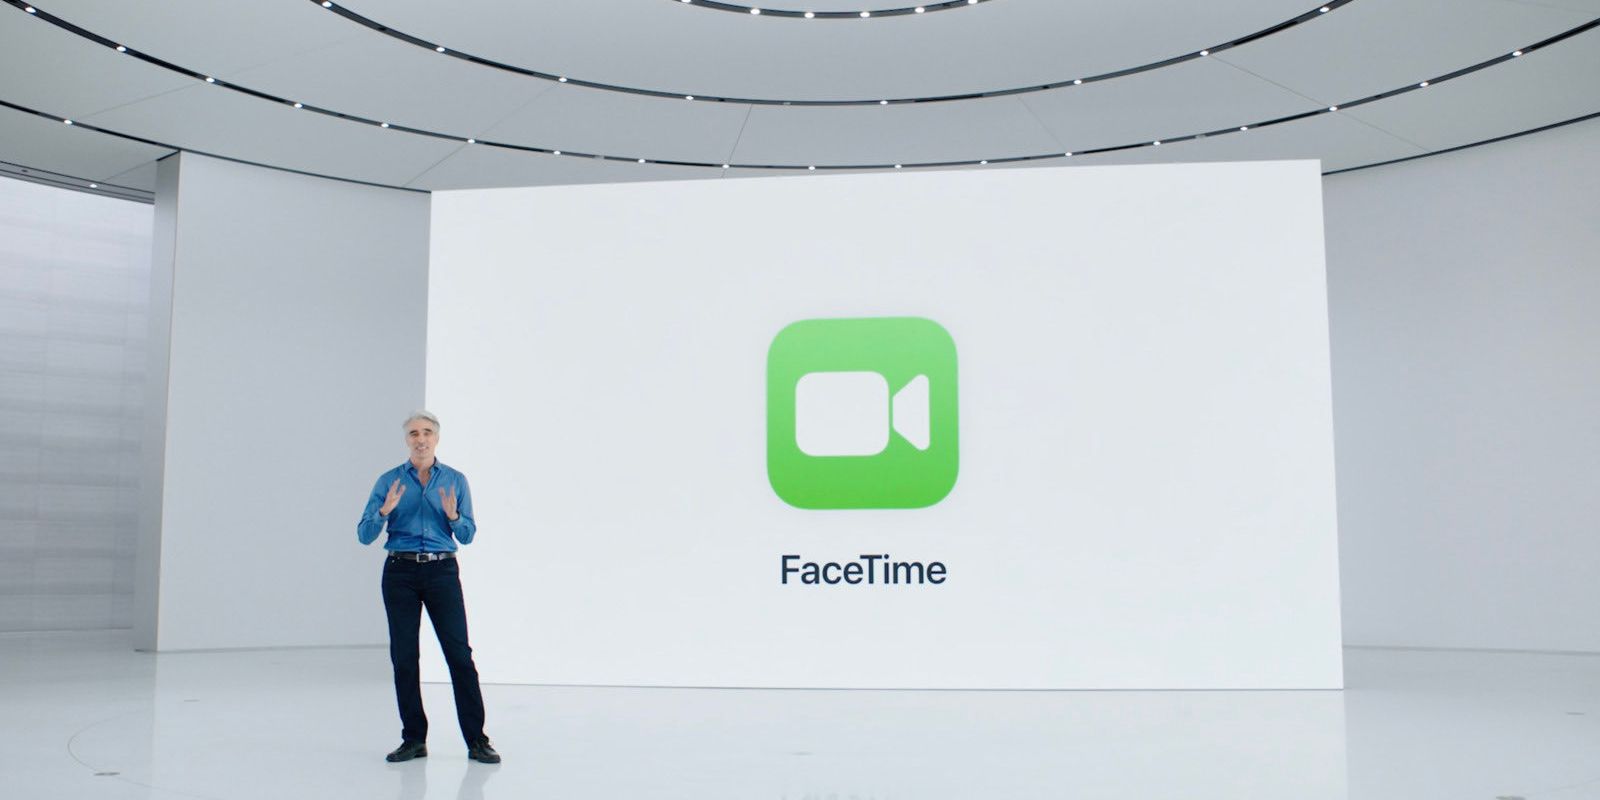 FaceTime presentation during WWDC 2021